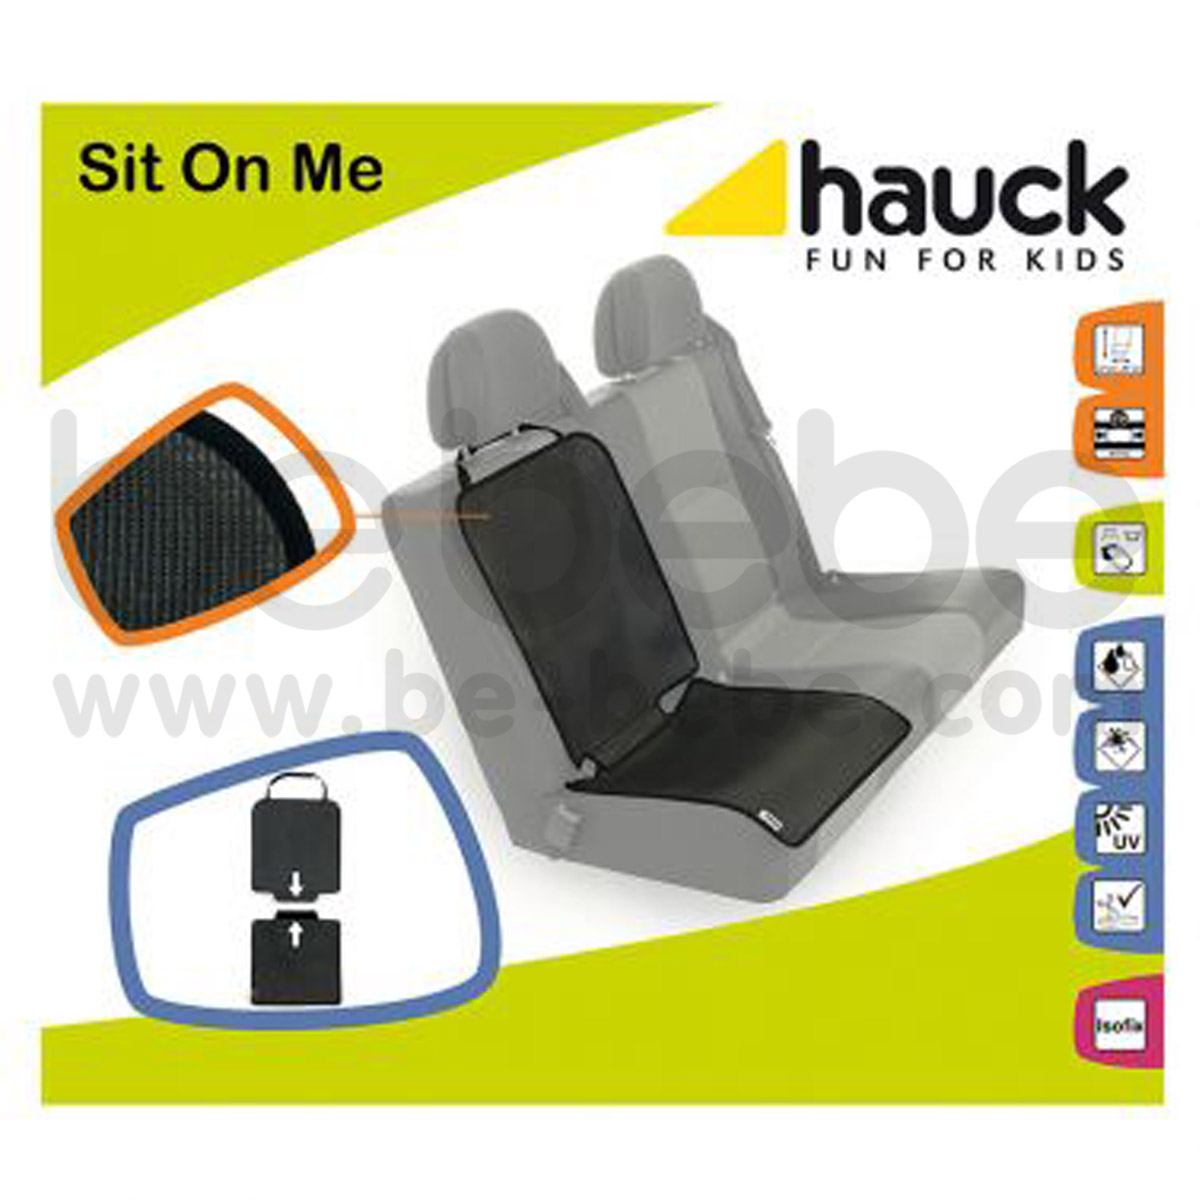 Hauck : Sit On Me RT 1190